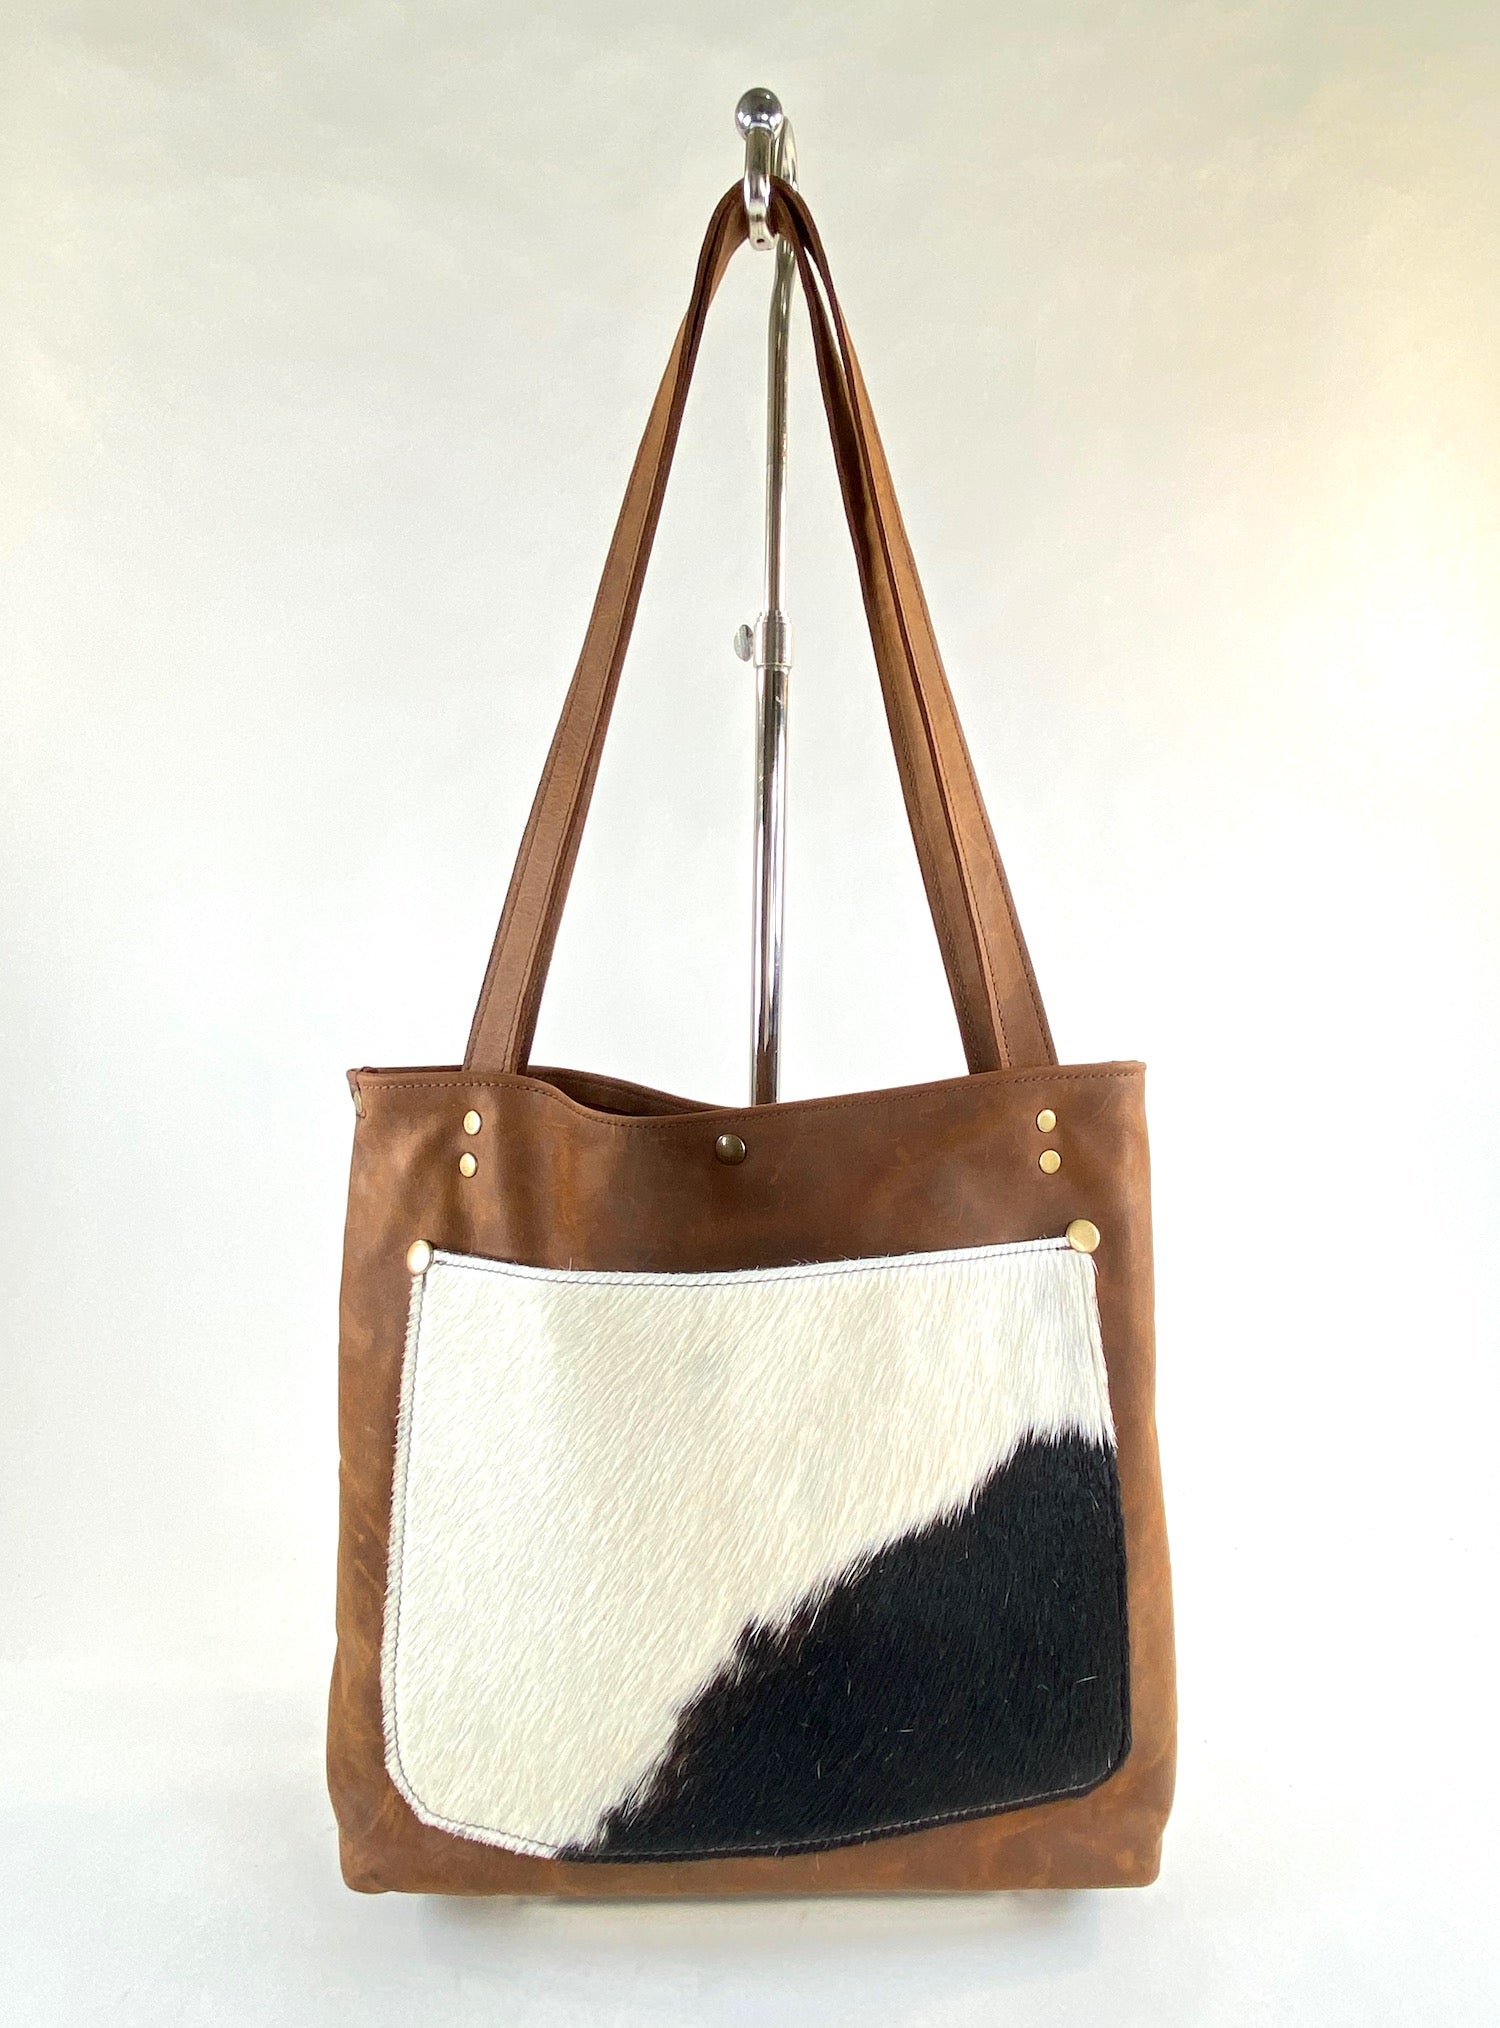 Cnoles Women's Medium Cowhide Leather Tote Handbag